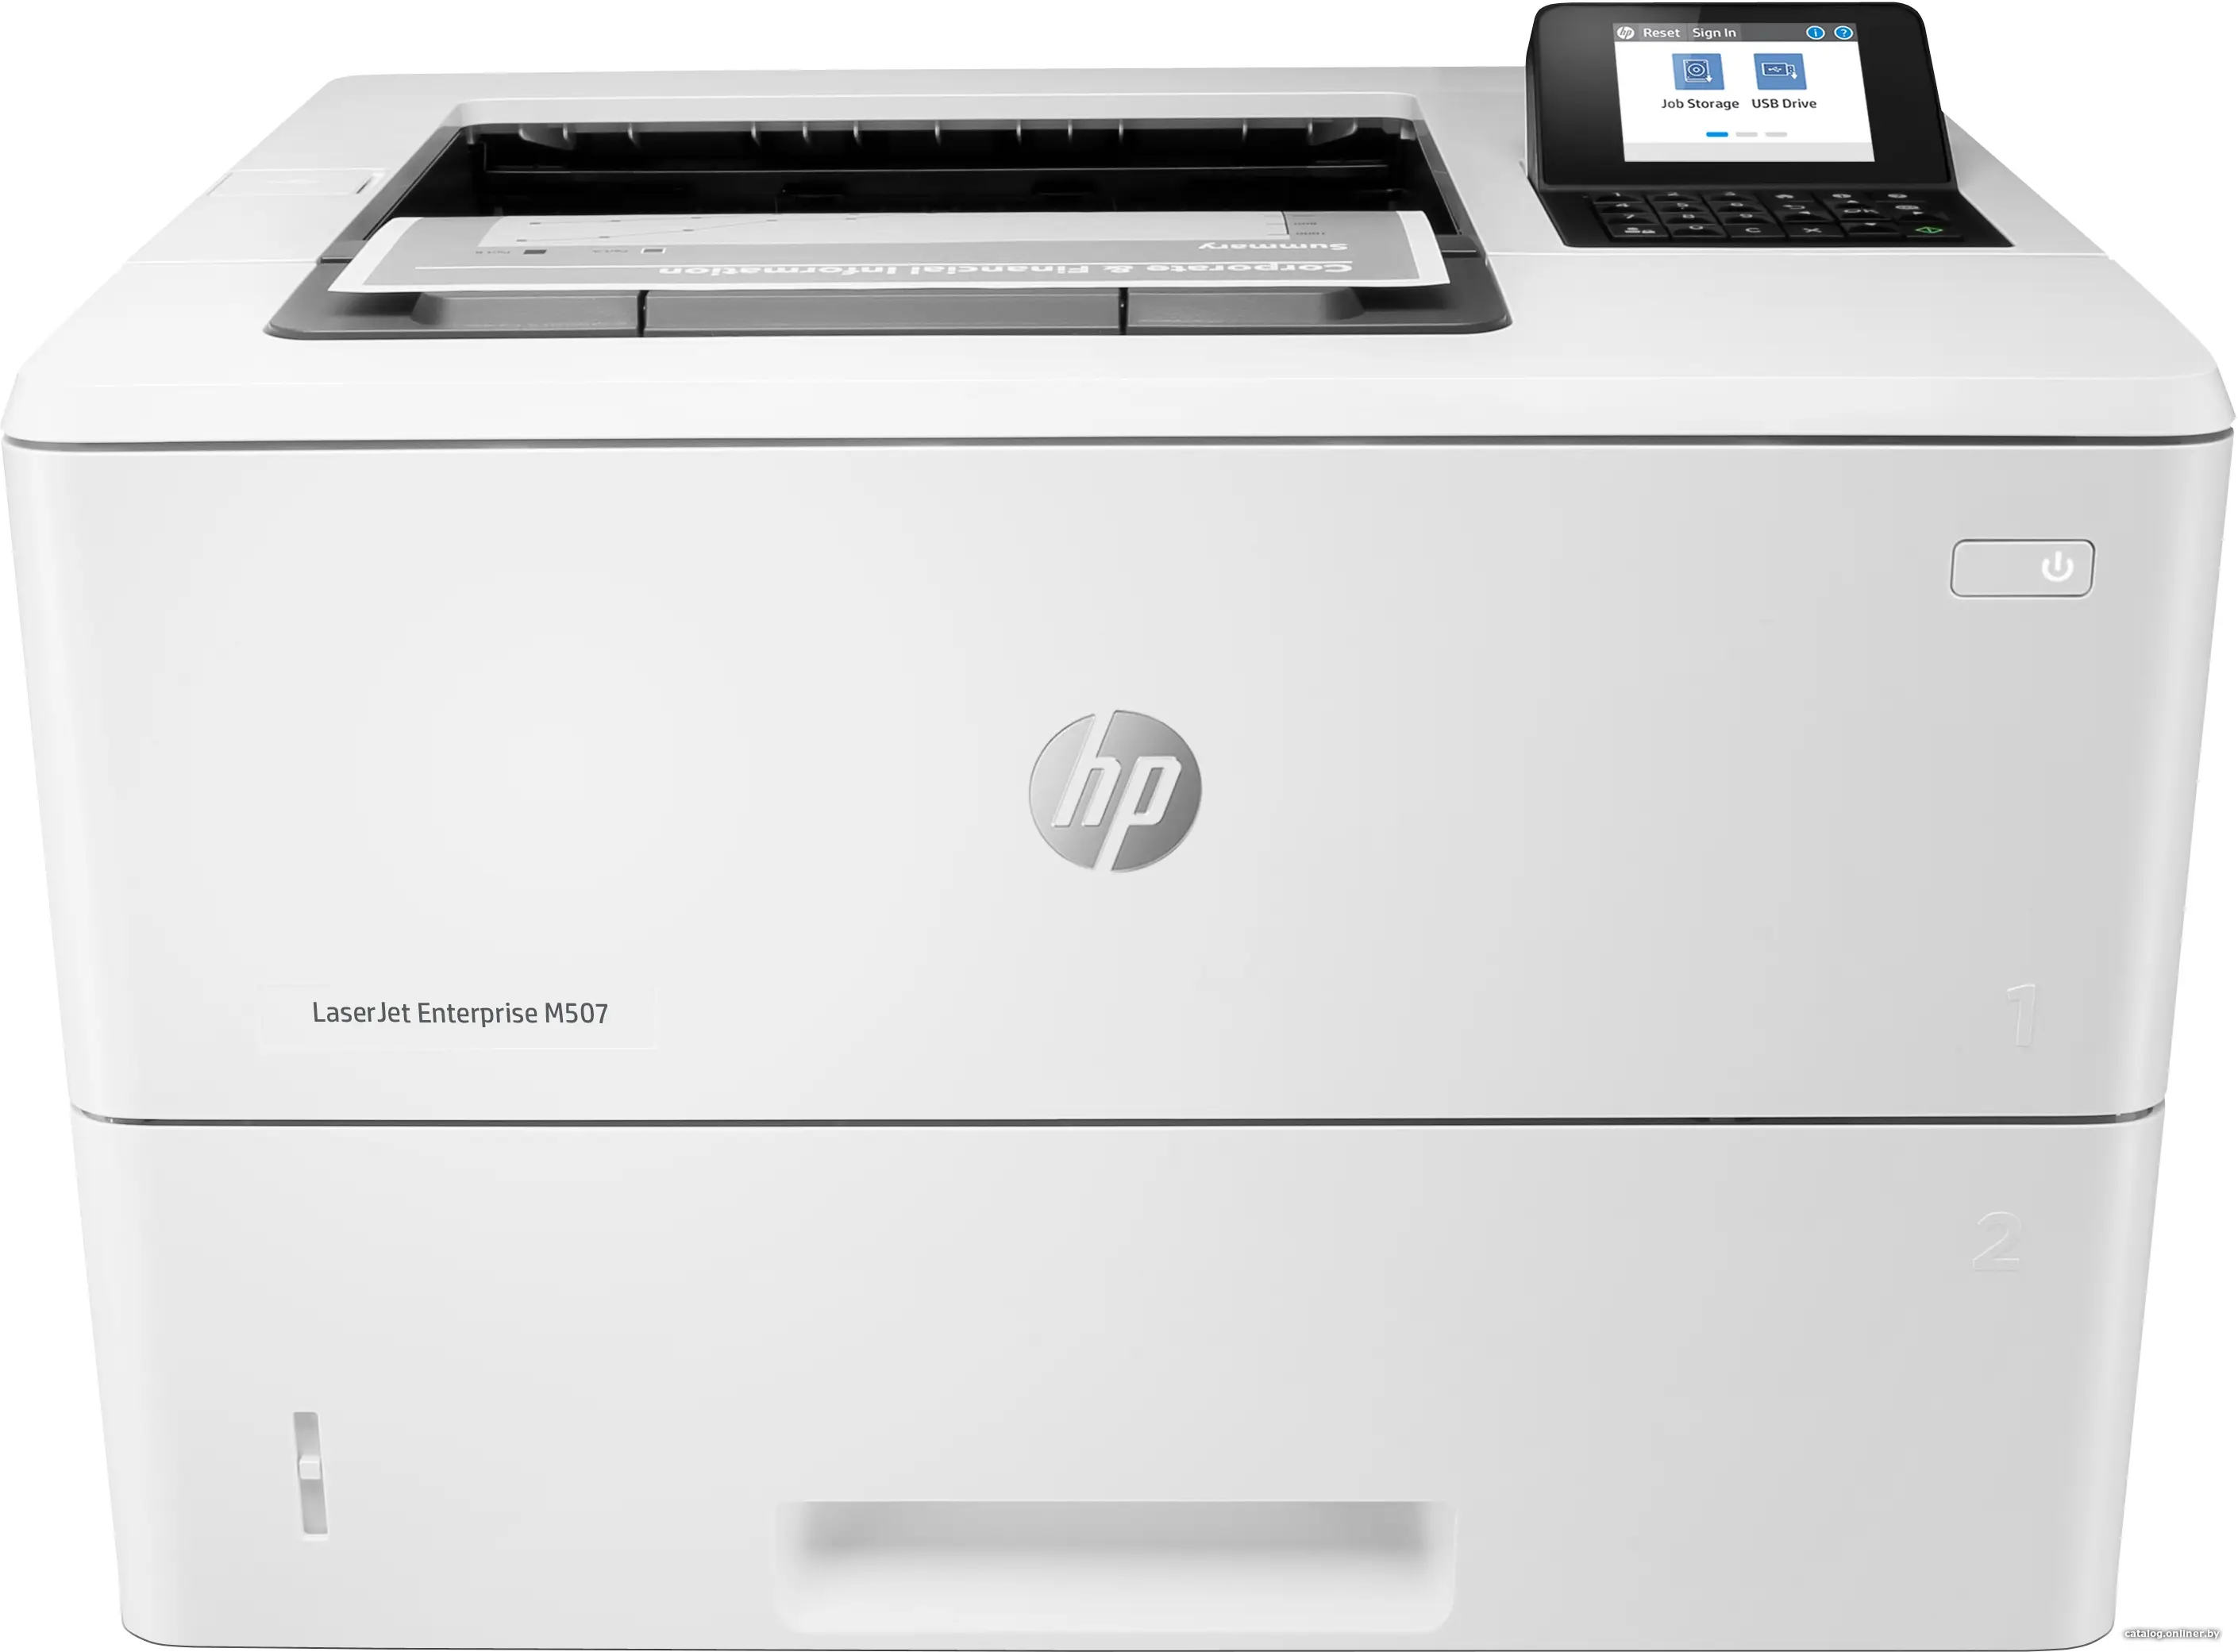 Купить Принтер HP LaserJet Enterprise M507dn, цена, опт и розница